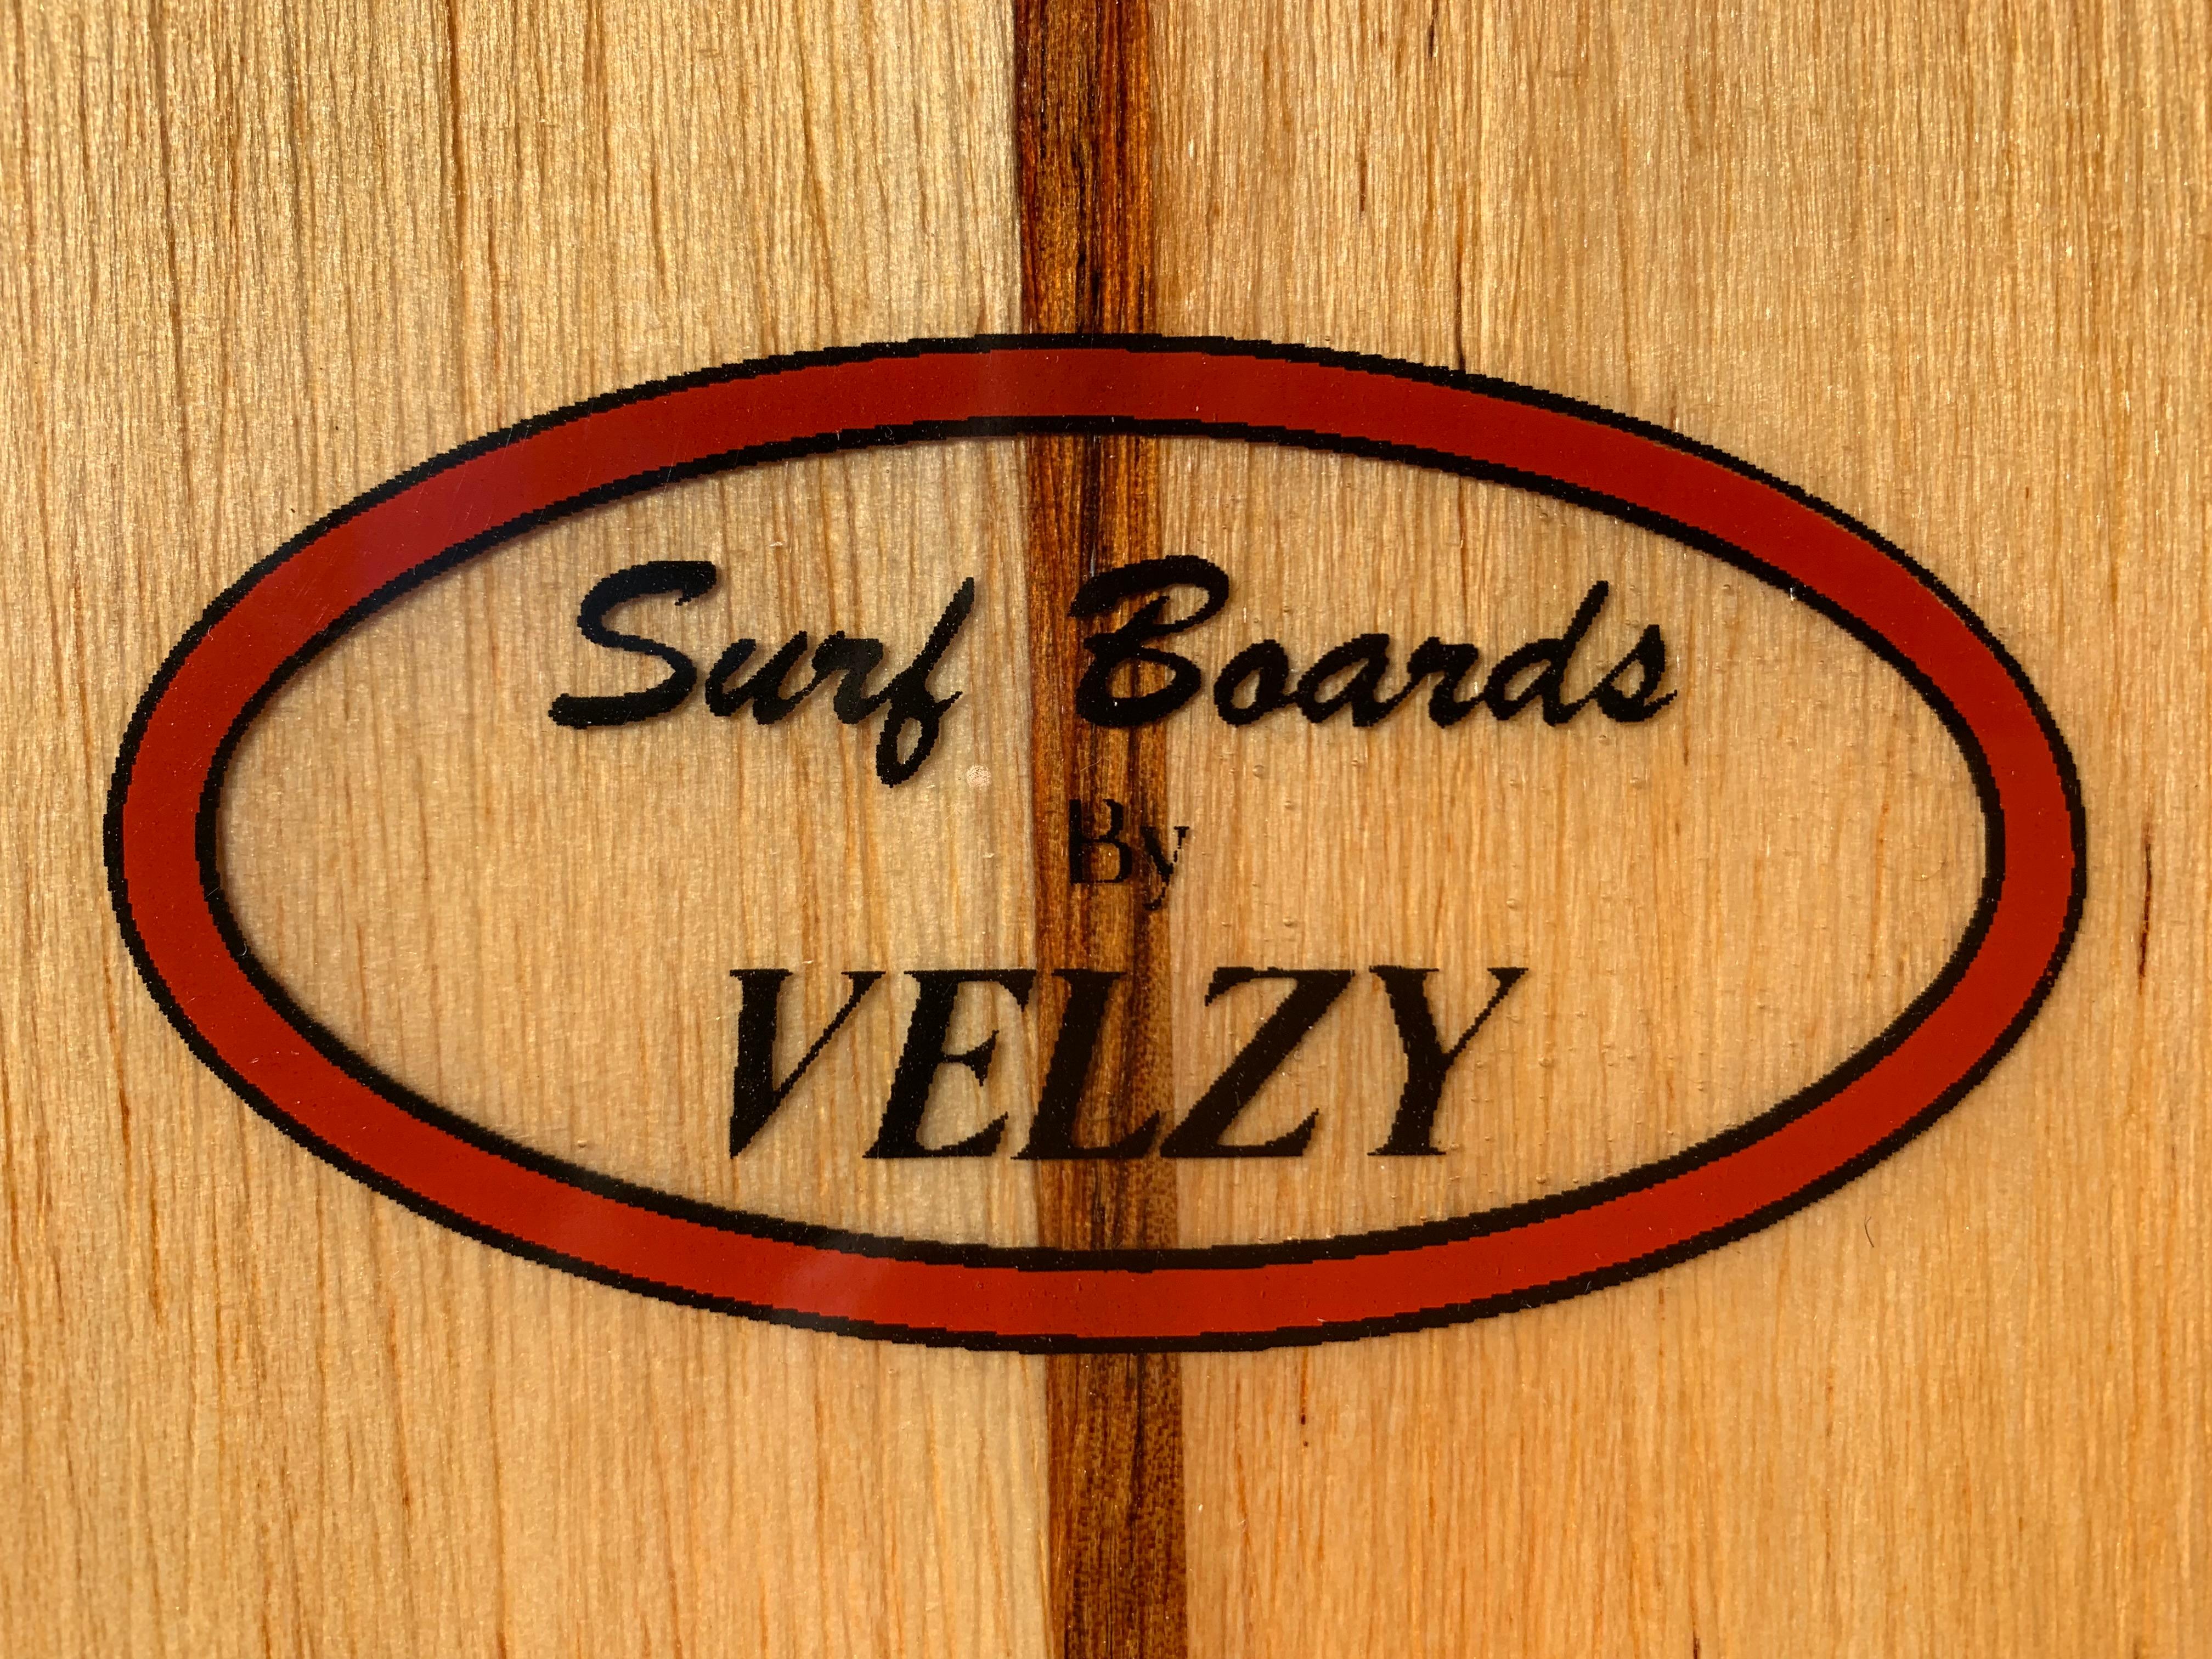 American 1990s Vintage Dale Velzy balsawood longboard  For Sale